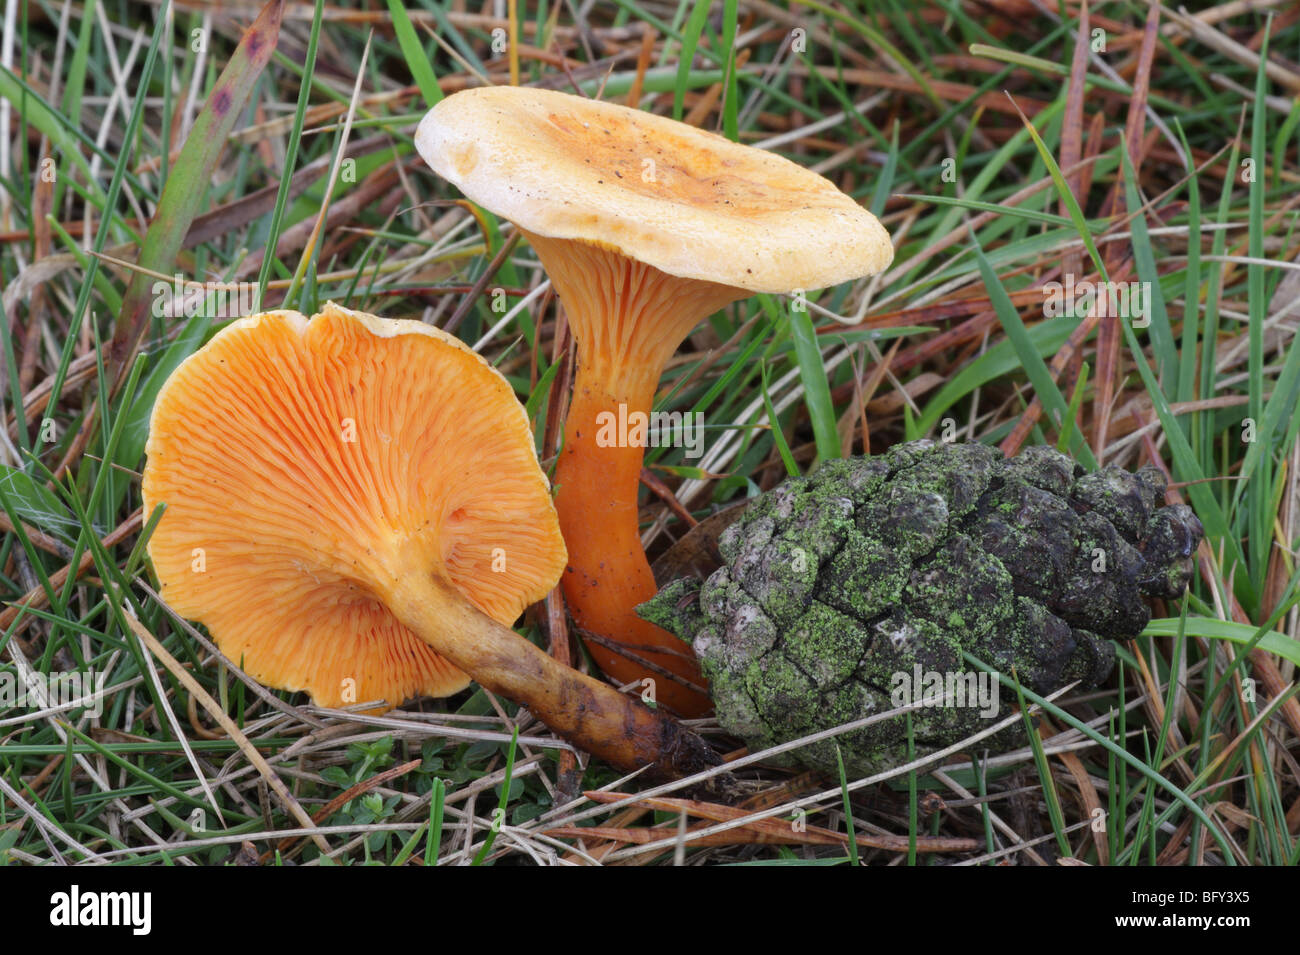 False Chanterelle - Hygrophoropsis aurantiaca Stock Photo